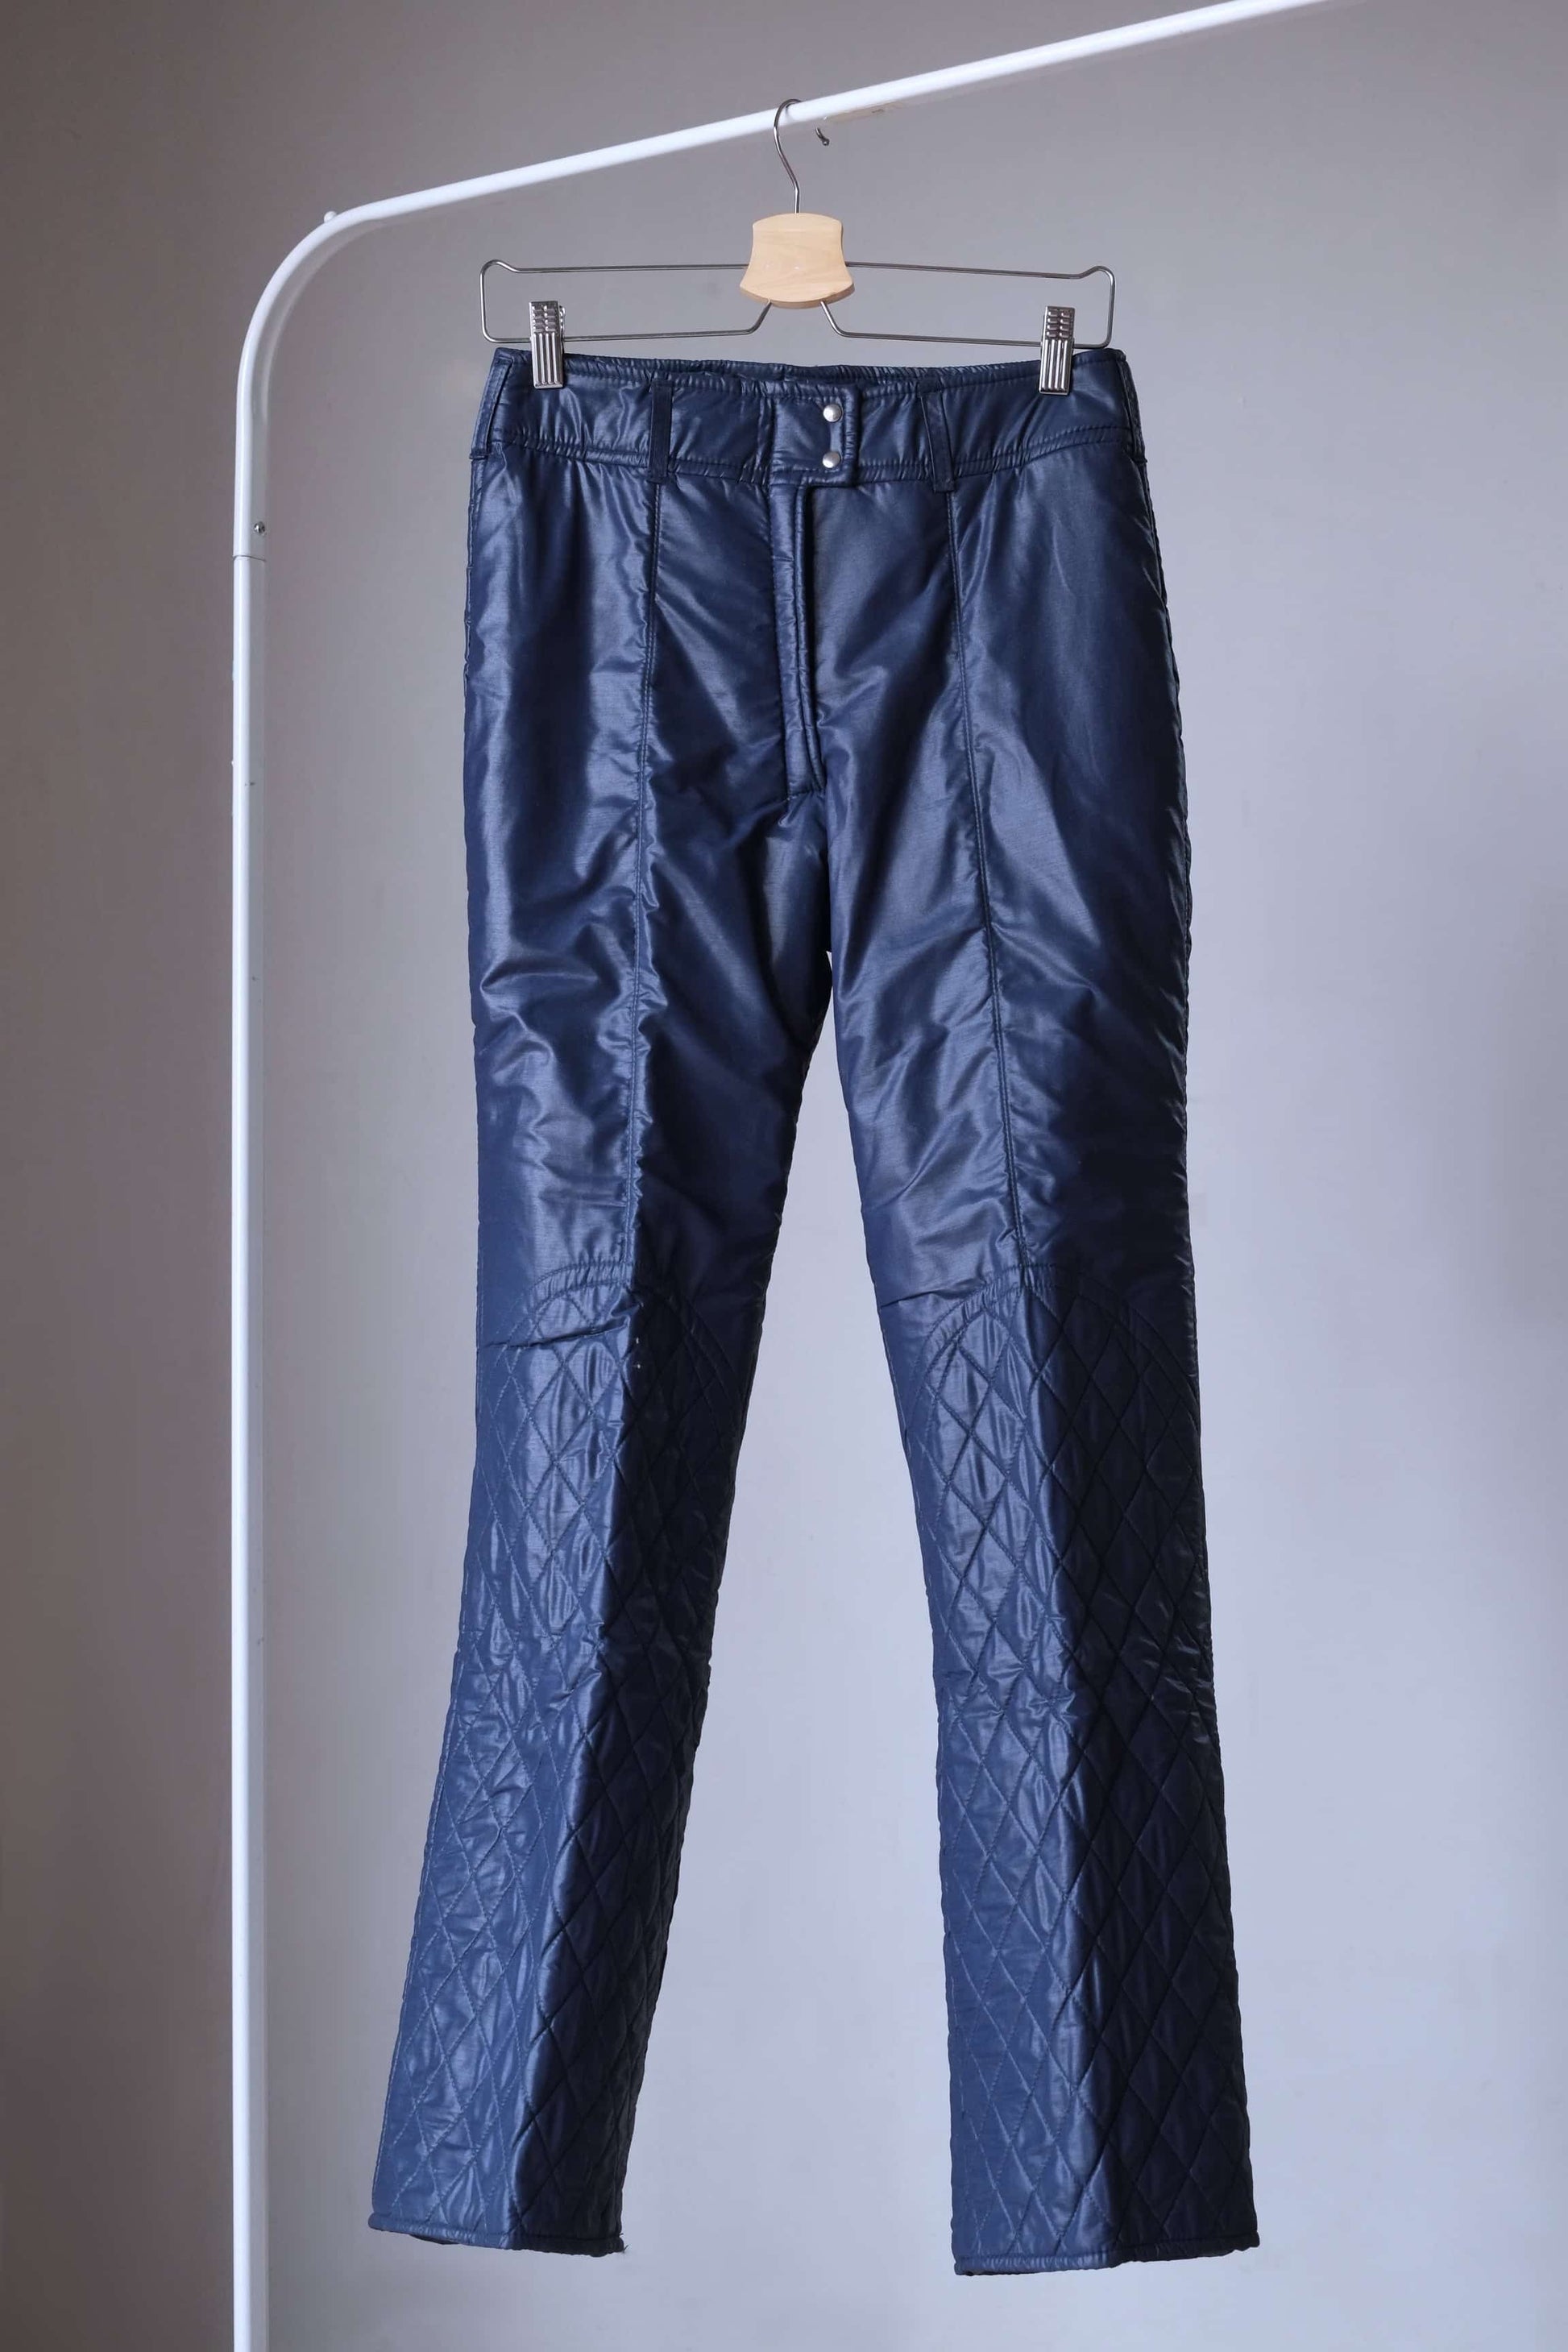 Vintage navy ski pants of 2-peice ski suit on hanger